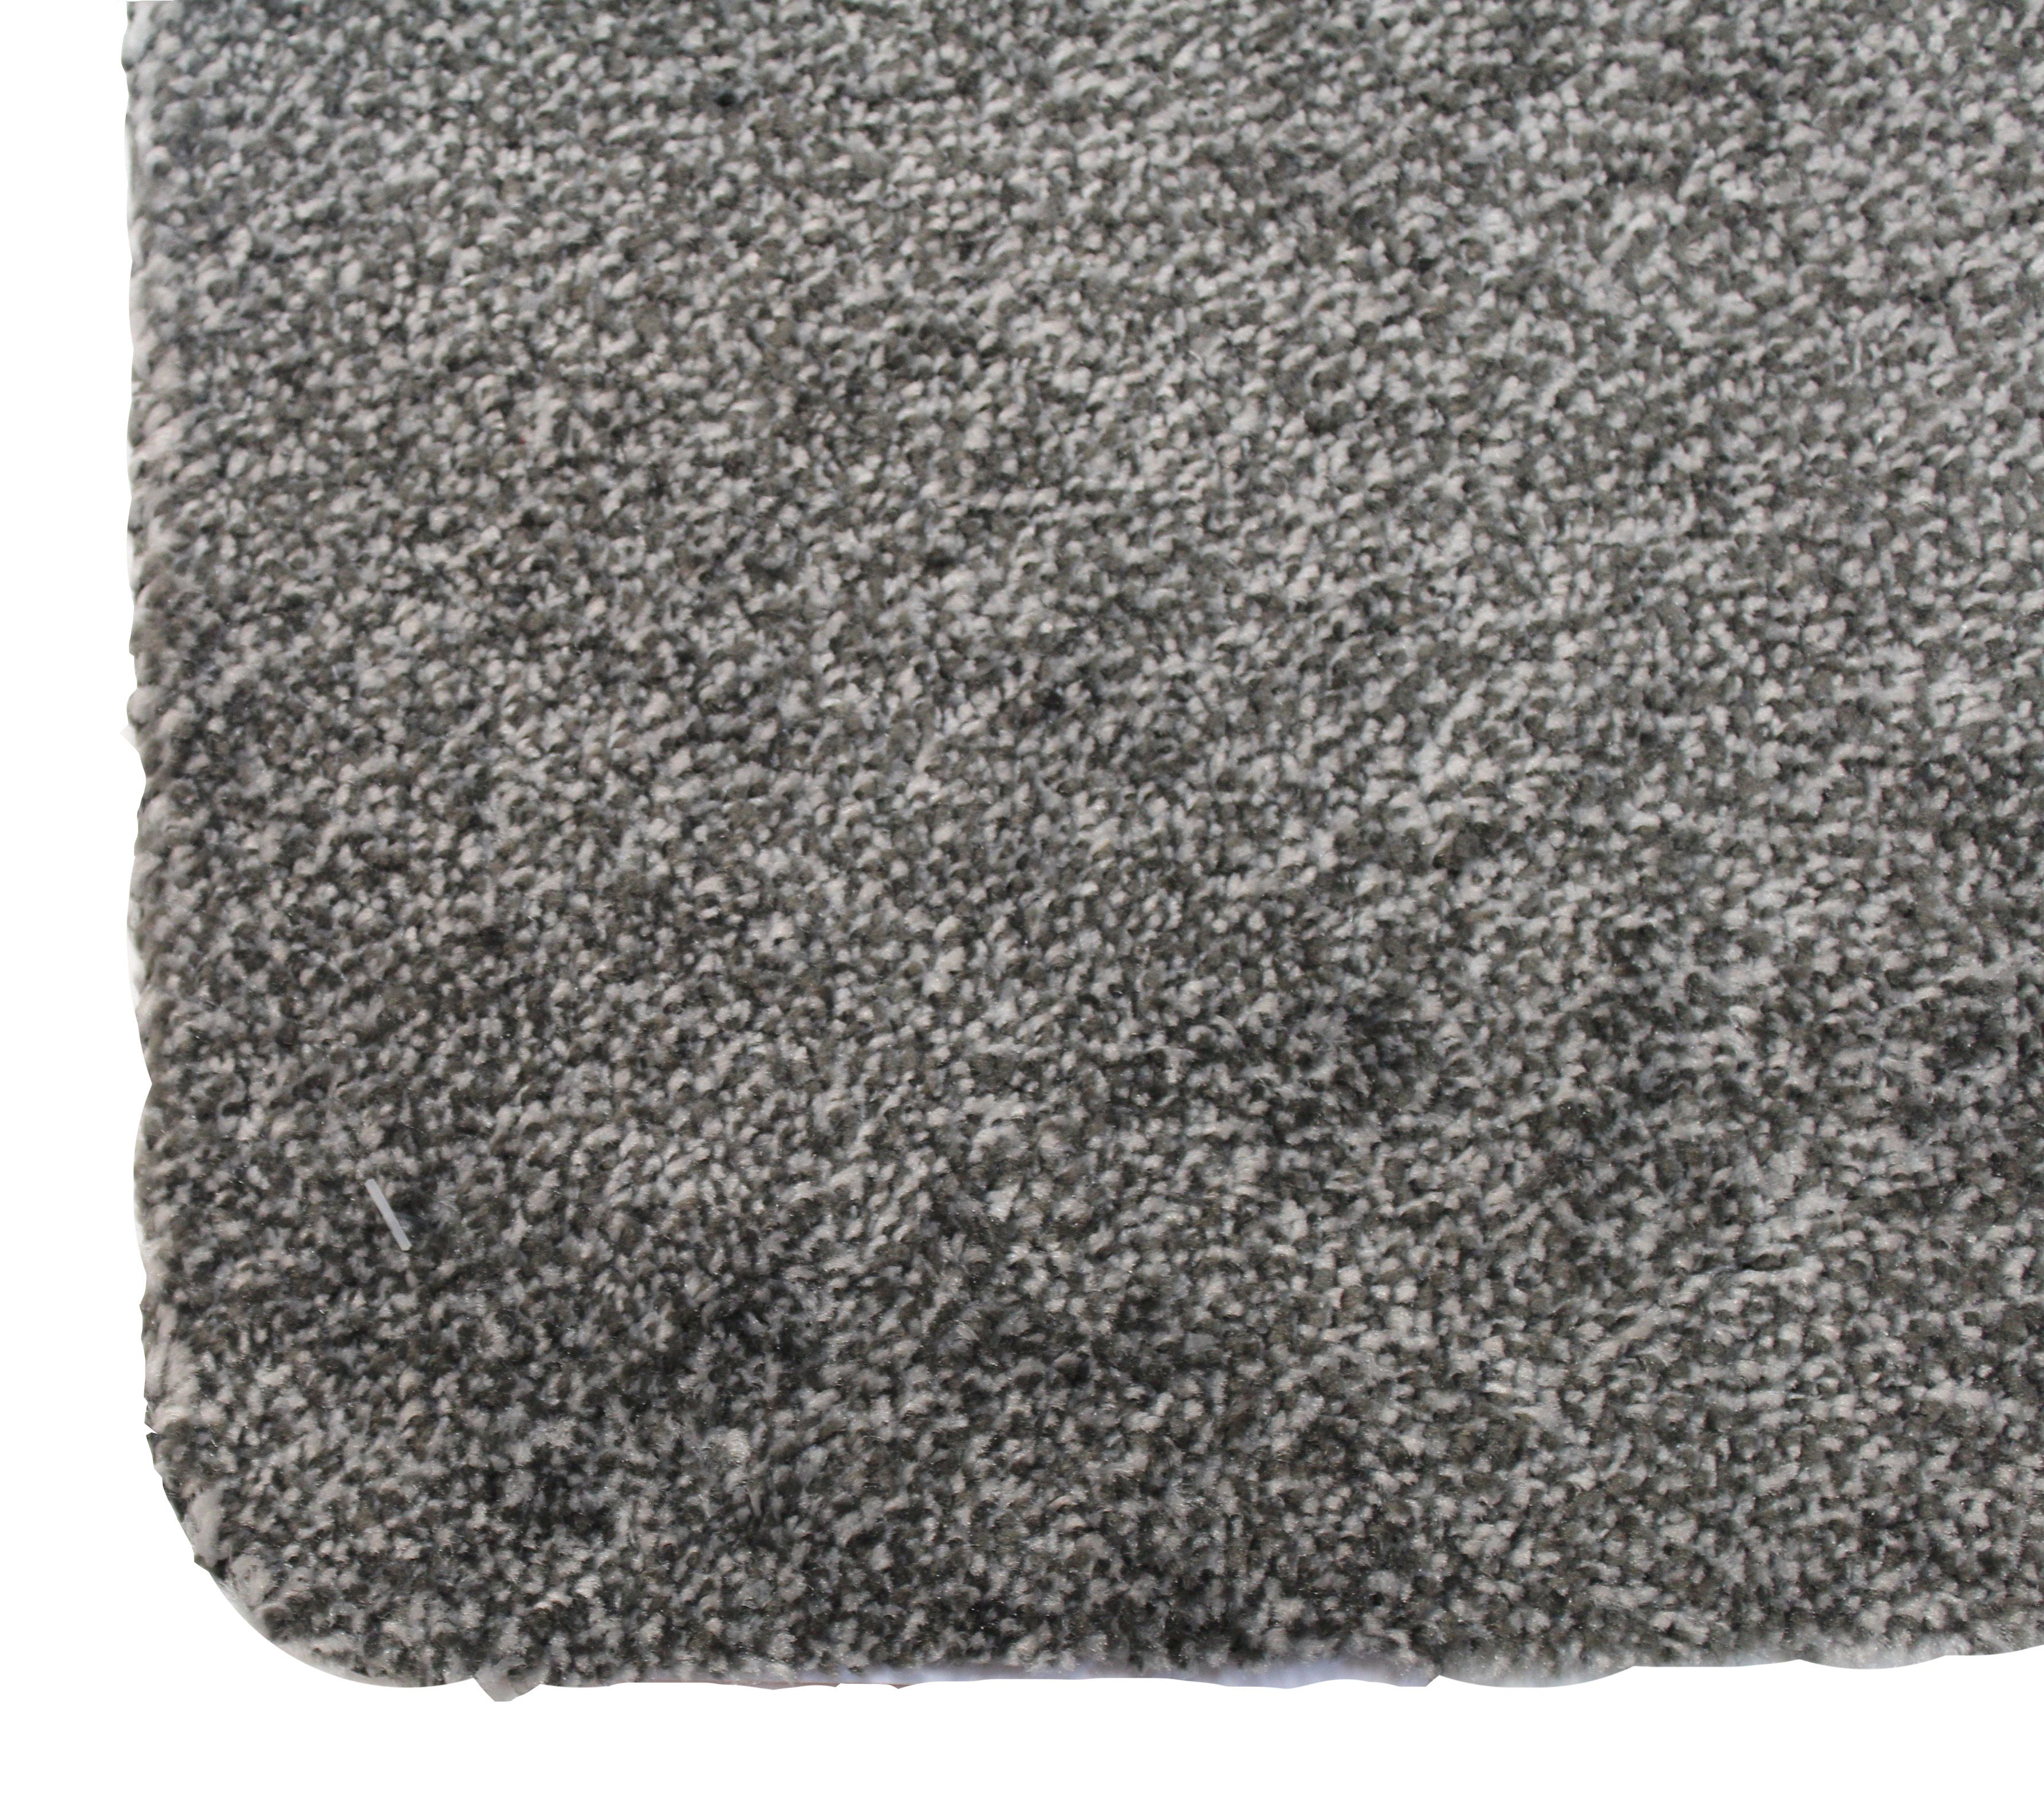 Flooring Grey Plain Door mat, 75cm x 50cm